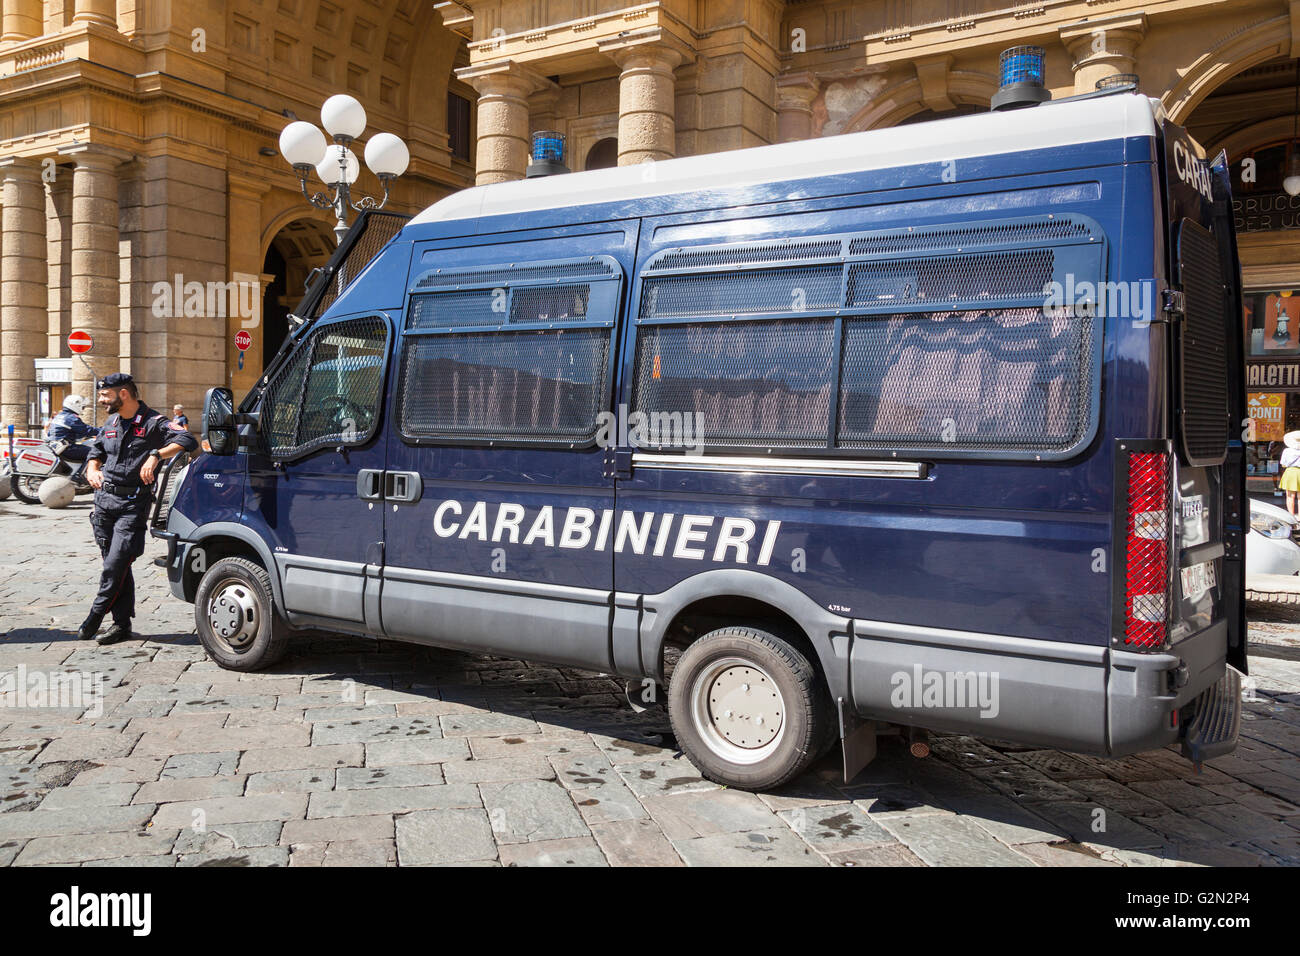 Carabinieri military police van and policeman, Piazza Della Repubblica, Florence, Tuscany, Italy Stock Photo